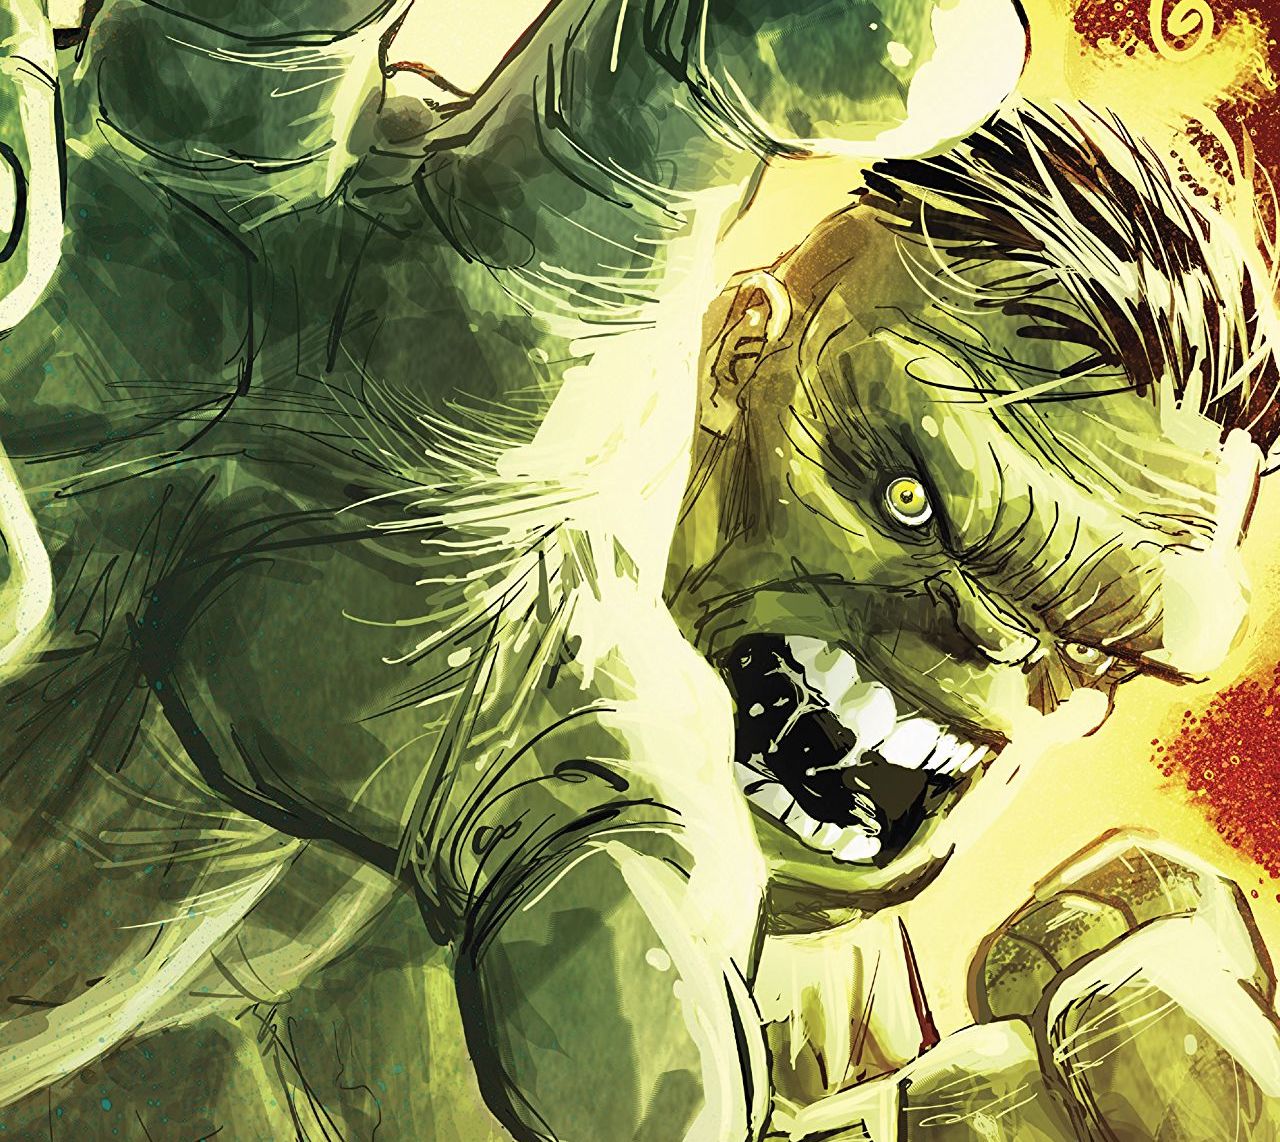 'Immortal Hulk Vol. 11: Apocrypha' is a good companion to the 'Immortal Hulk' series